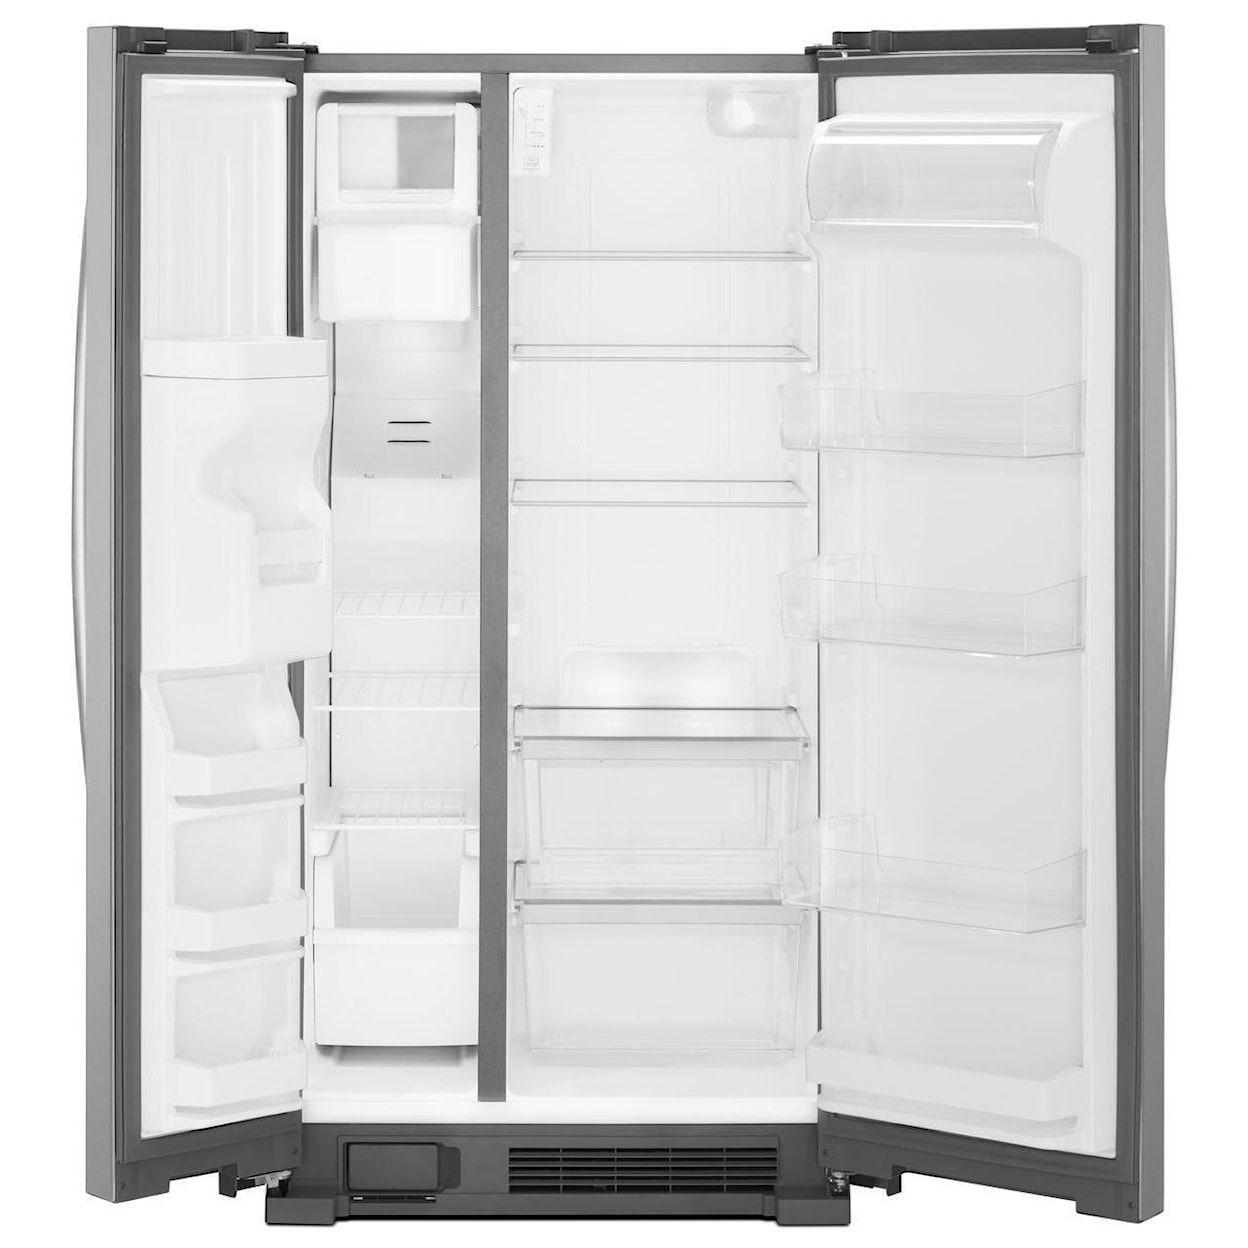 Whirlpool Side-By-Side Refrigerators 33" Wide Side-by-Side Refrigerator